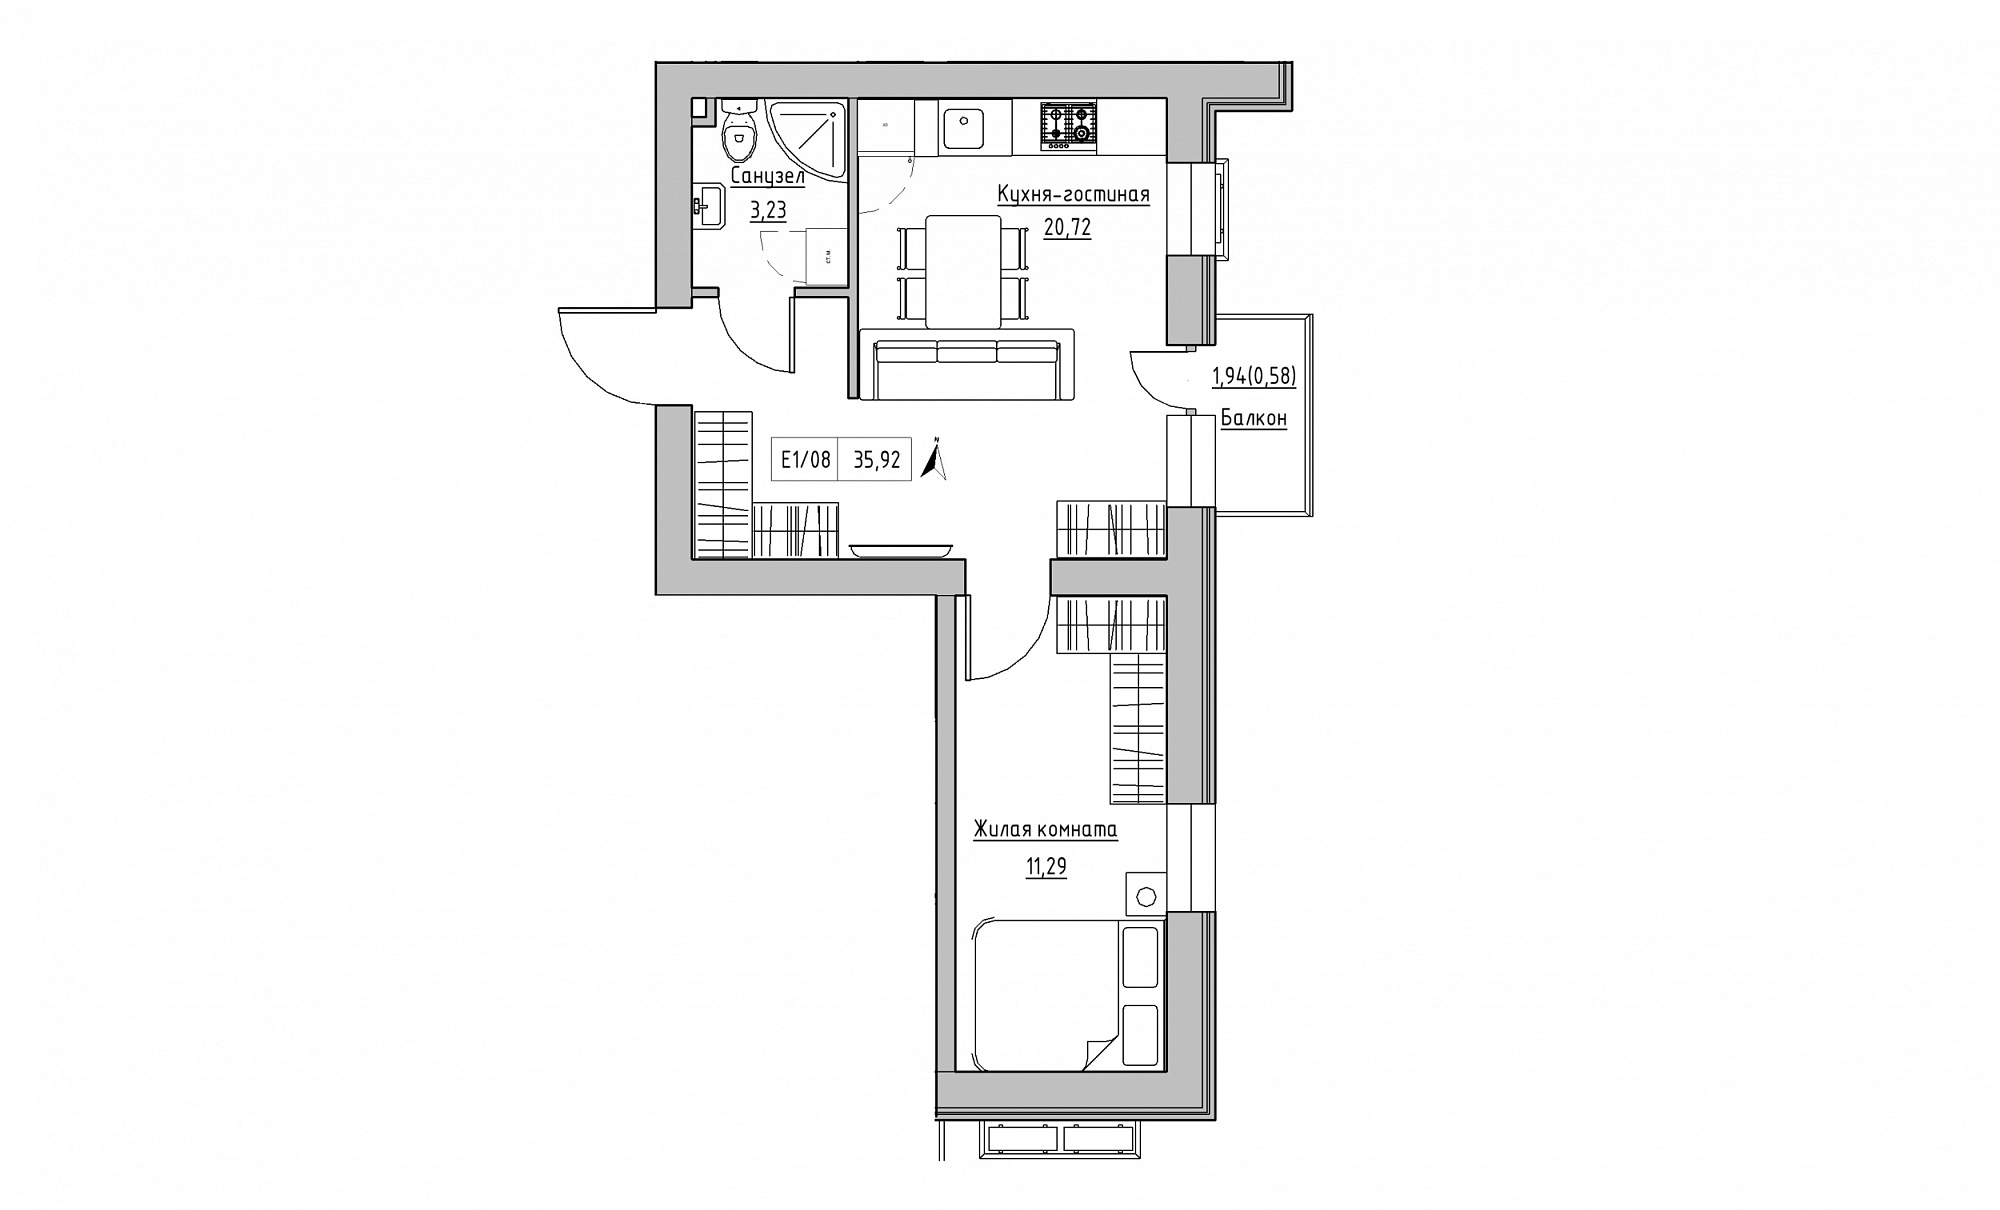 Planning 1-rm flats area 35.92m2, KS-015-02/0007.